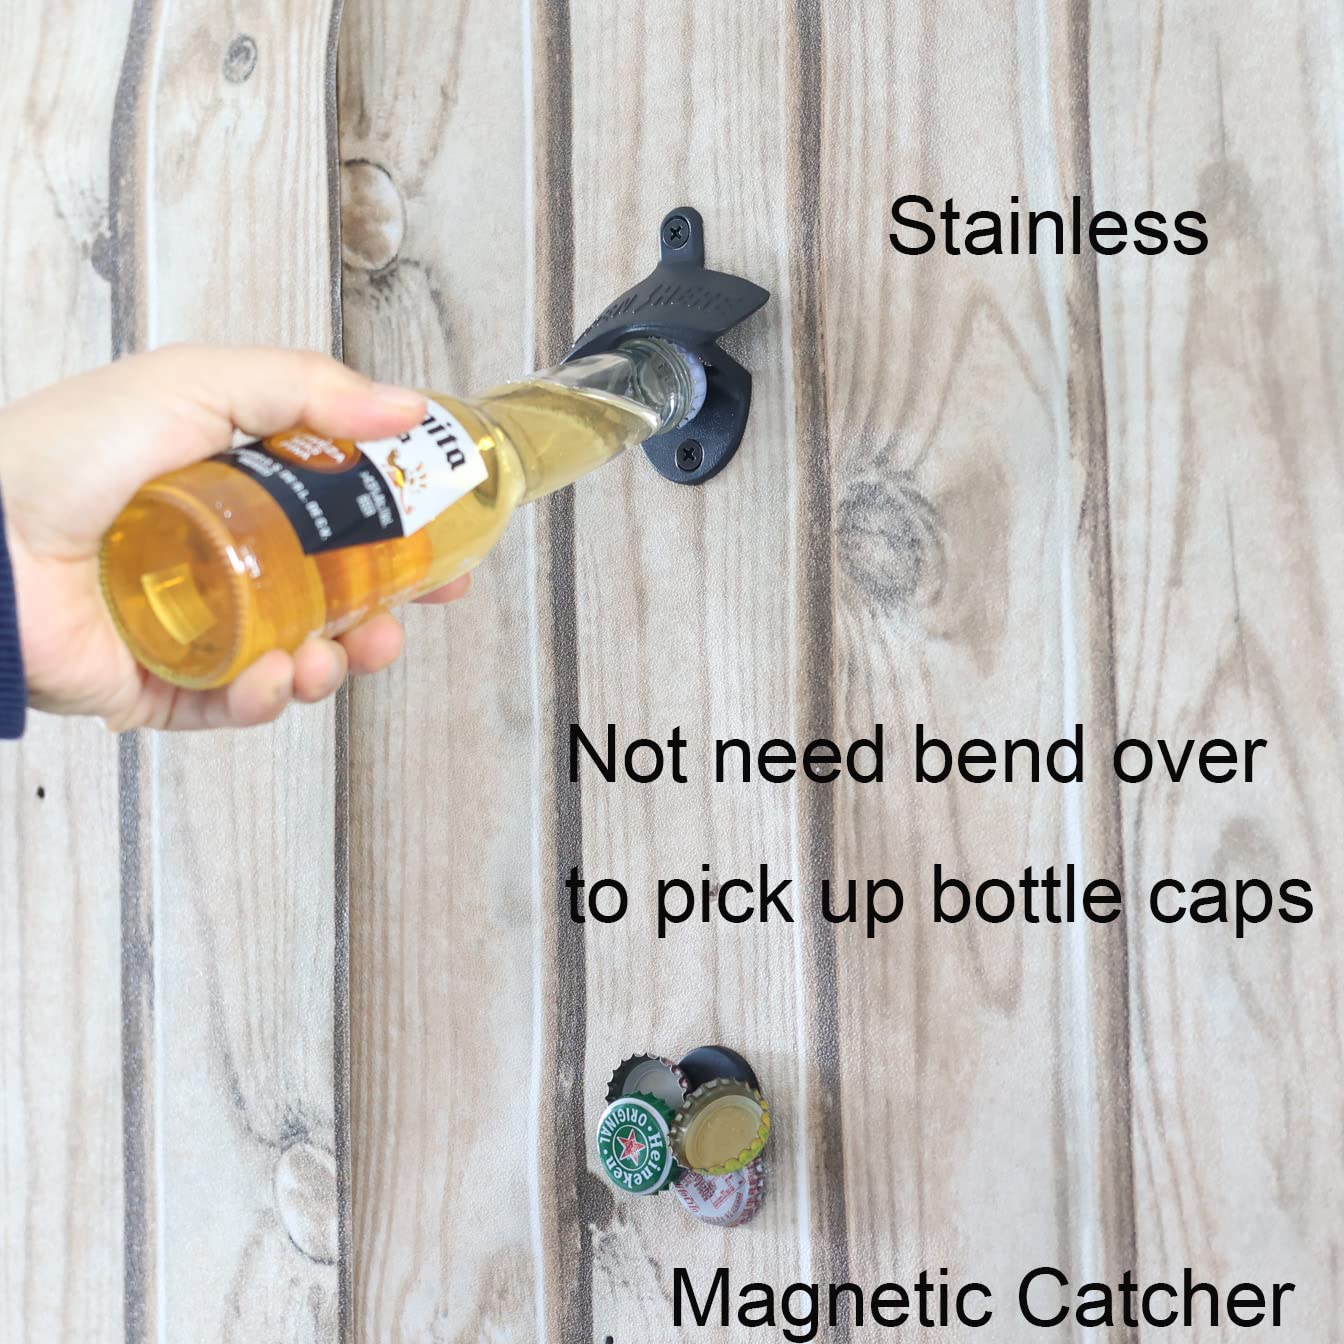 Jumiok Black Magnetic Beer Bottle Opener Wall Mounted Bottle Cap Opener with Magnet Catcher